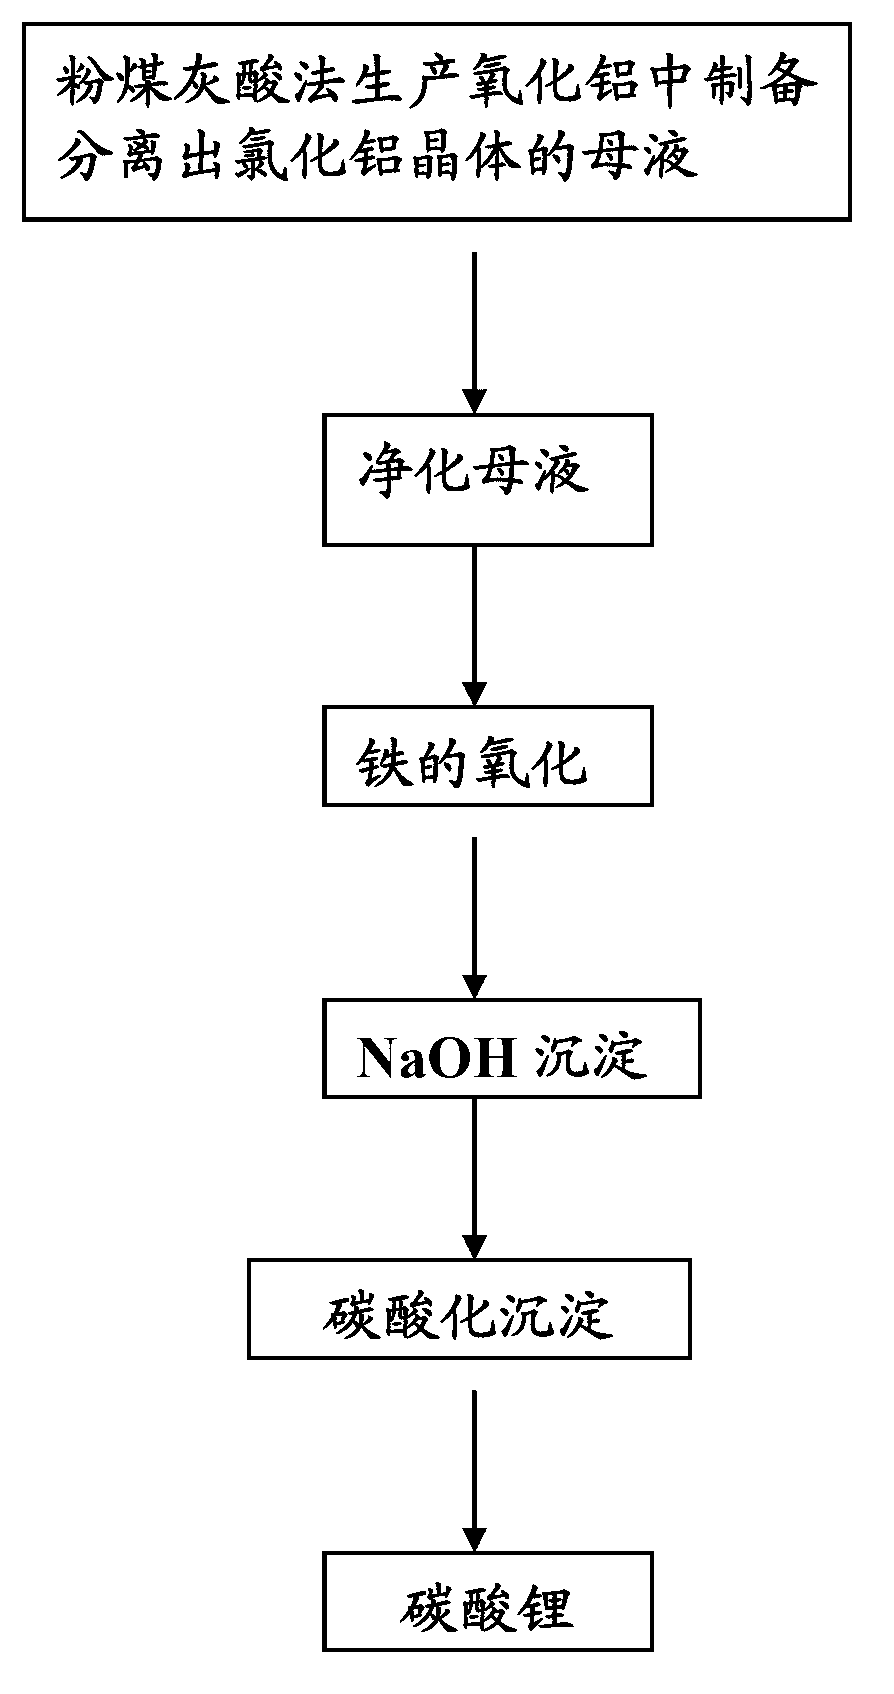 Method for preparing lithium carbonate from coal ash